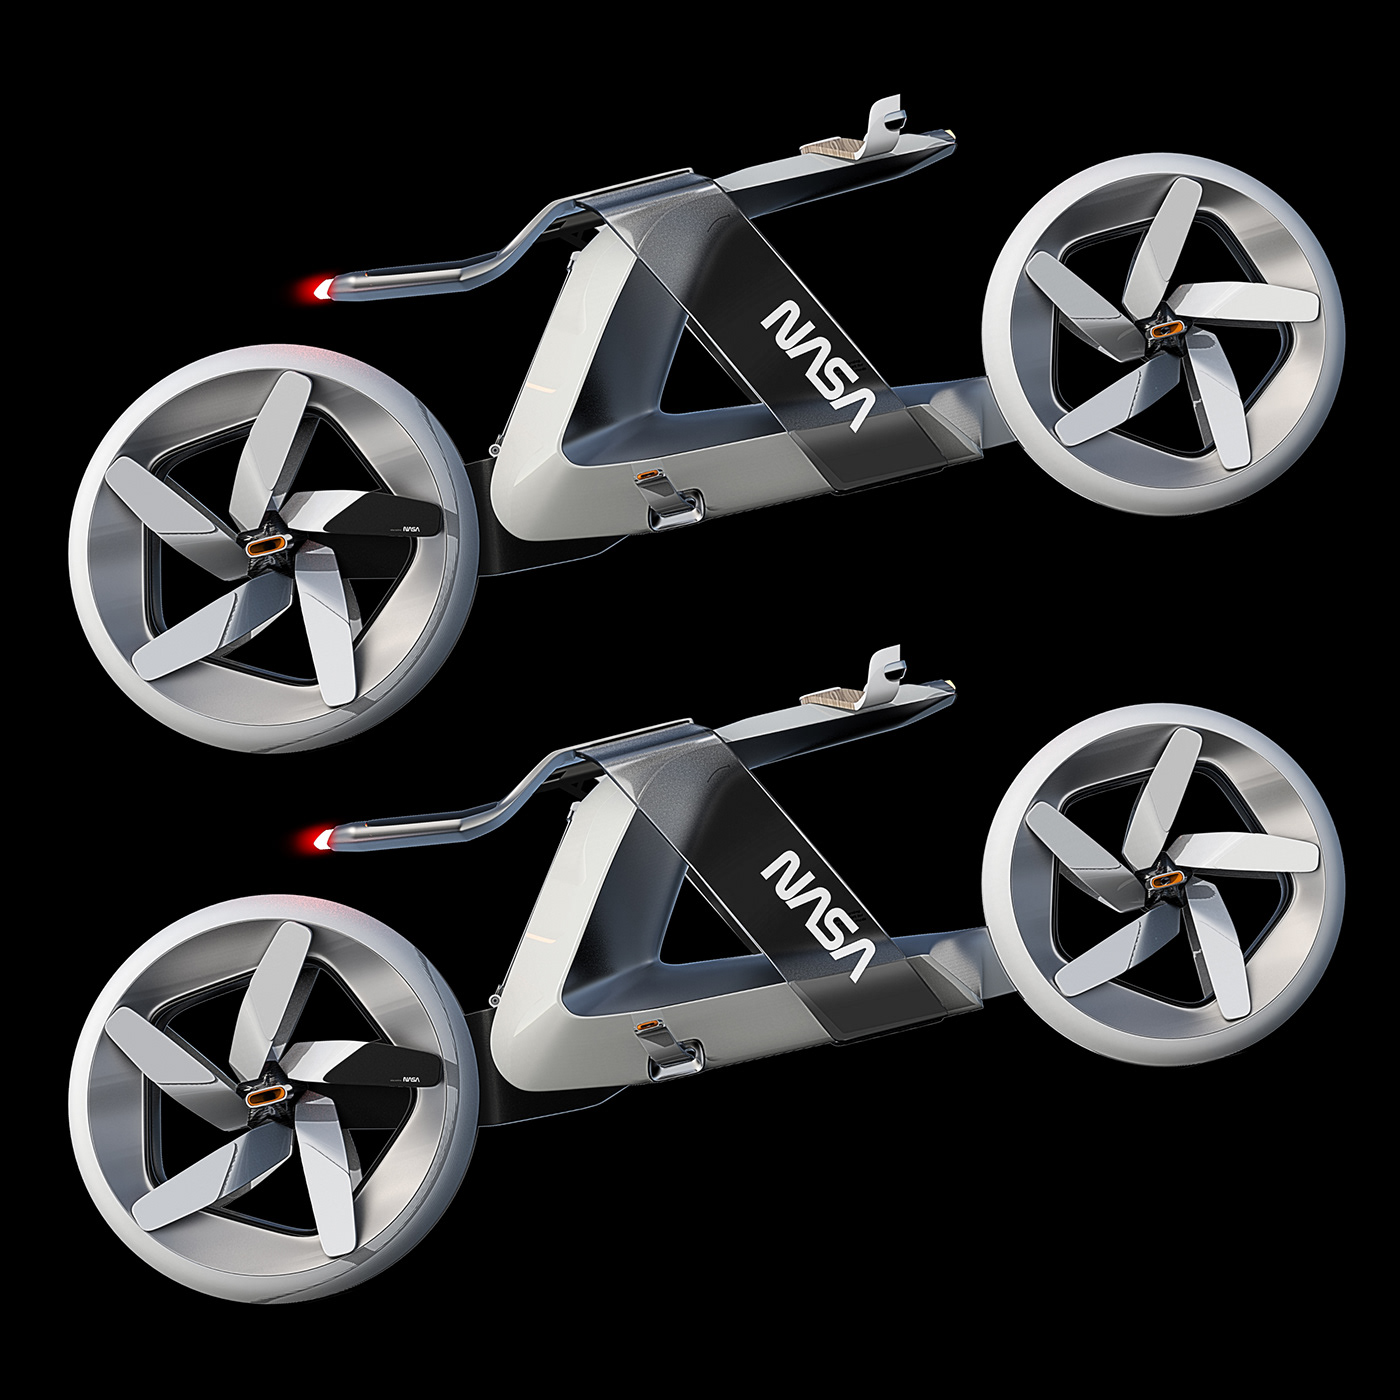 Bike cardesign conceptbike design industrialdesign motorcycle productdesign sketch